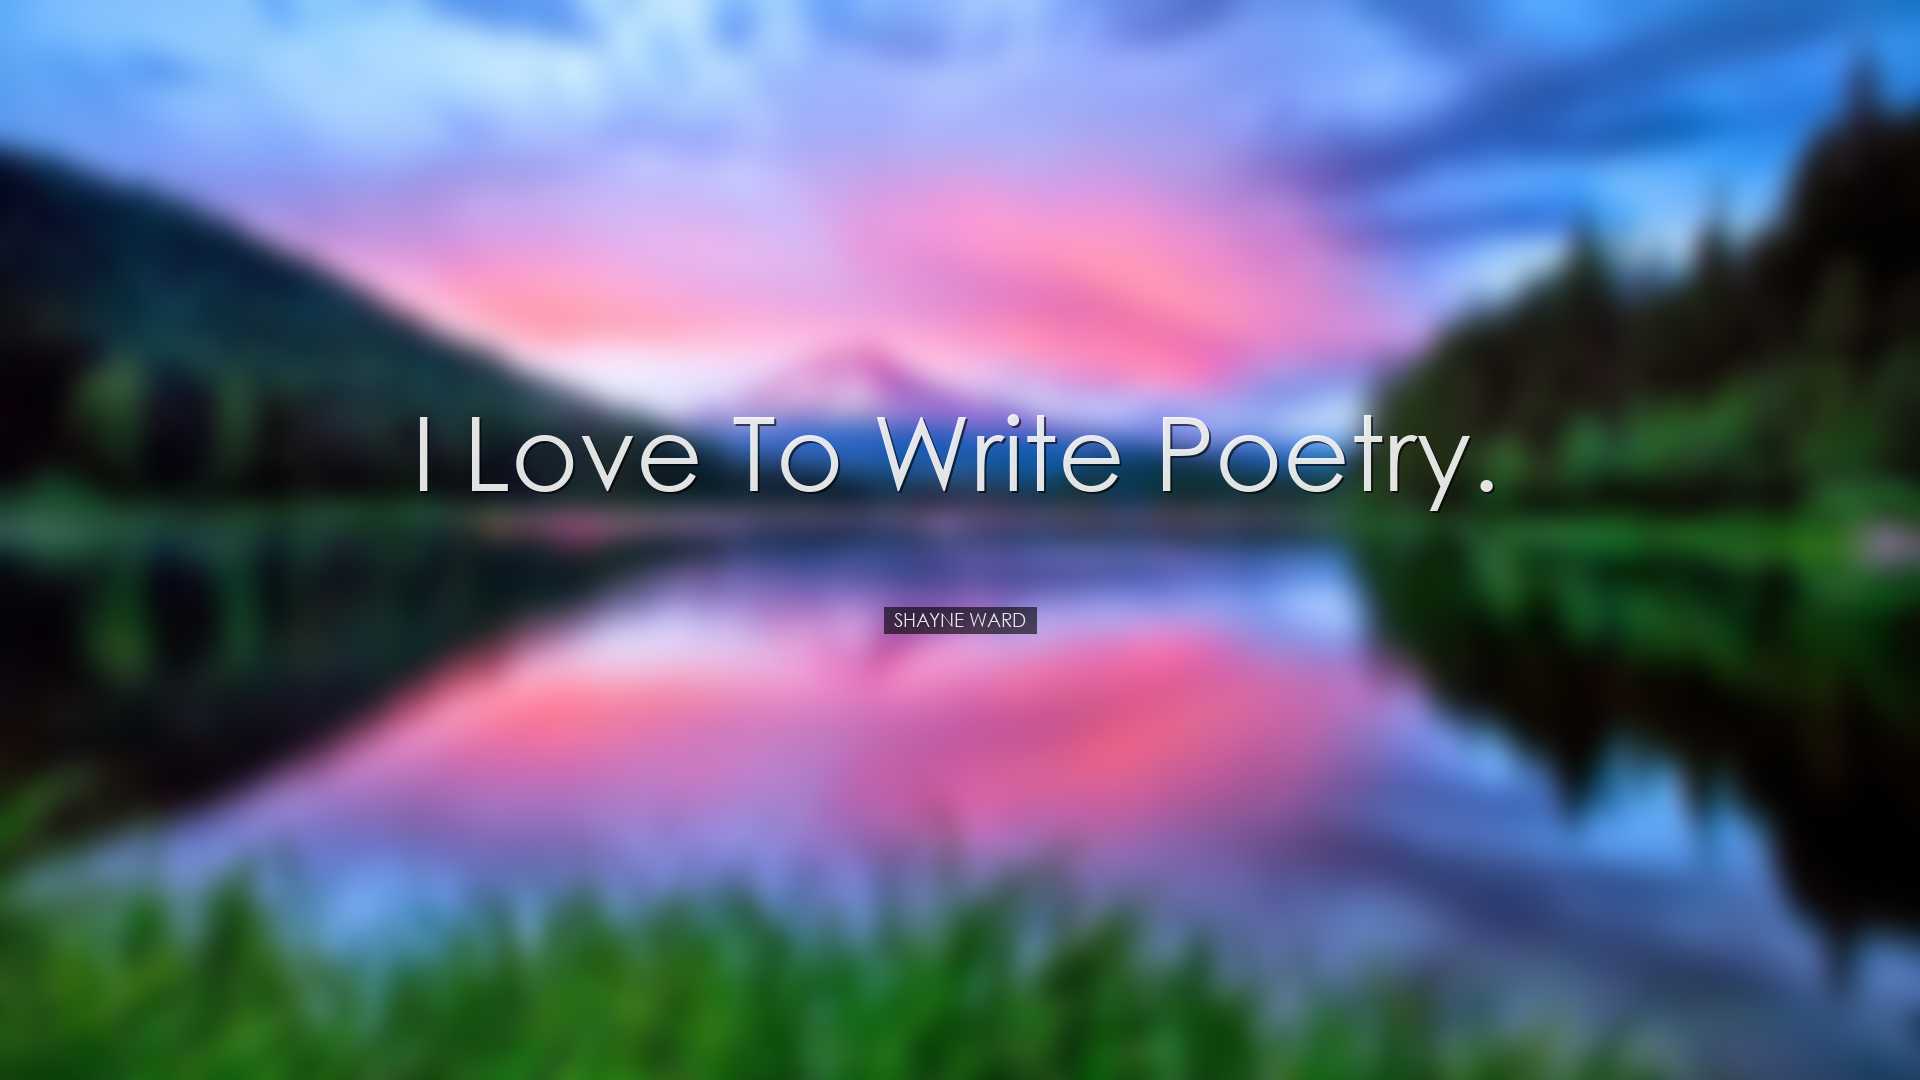 I love to write poetry. - Shayne Ward